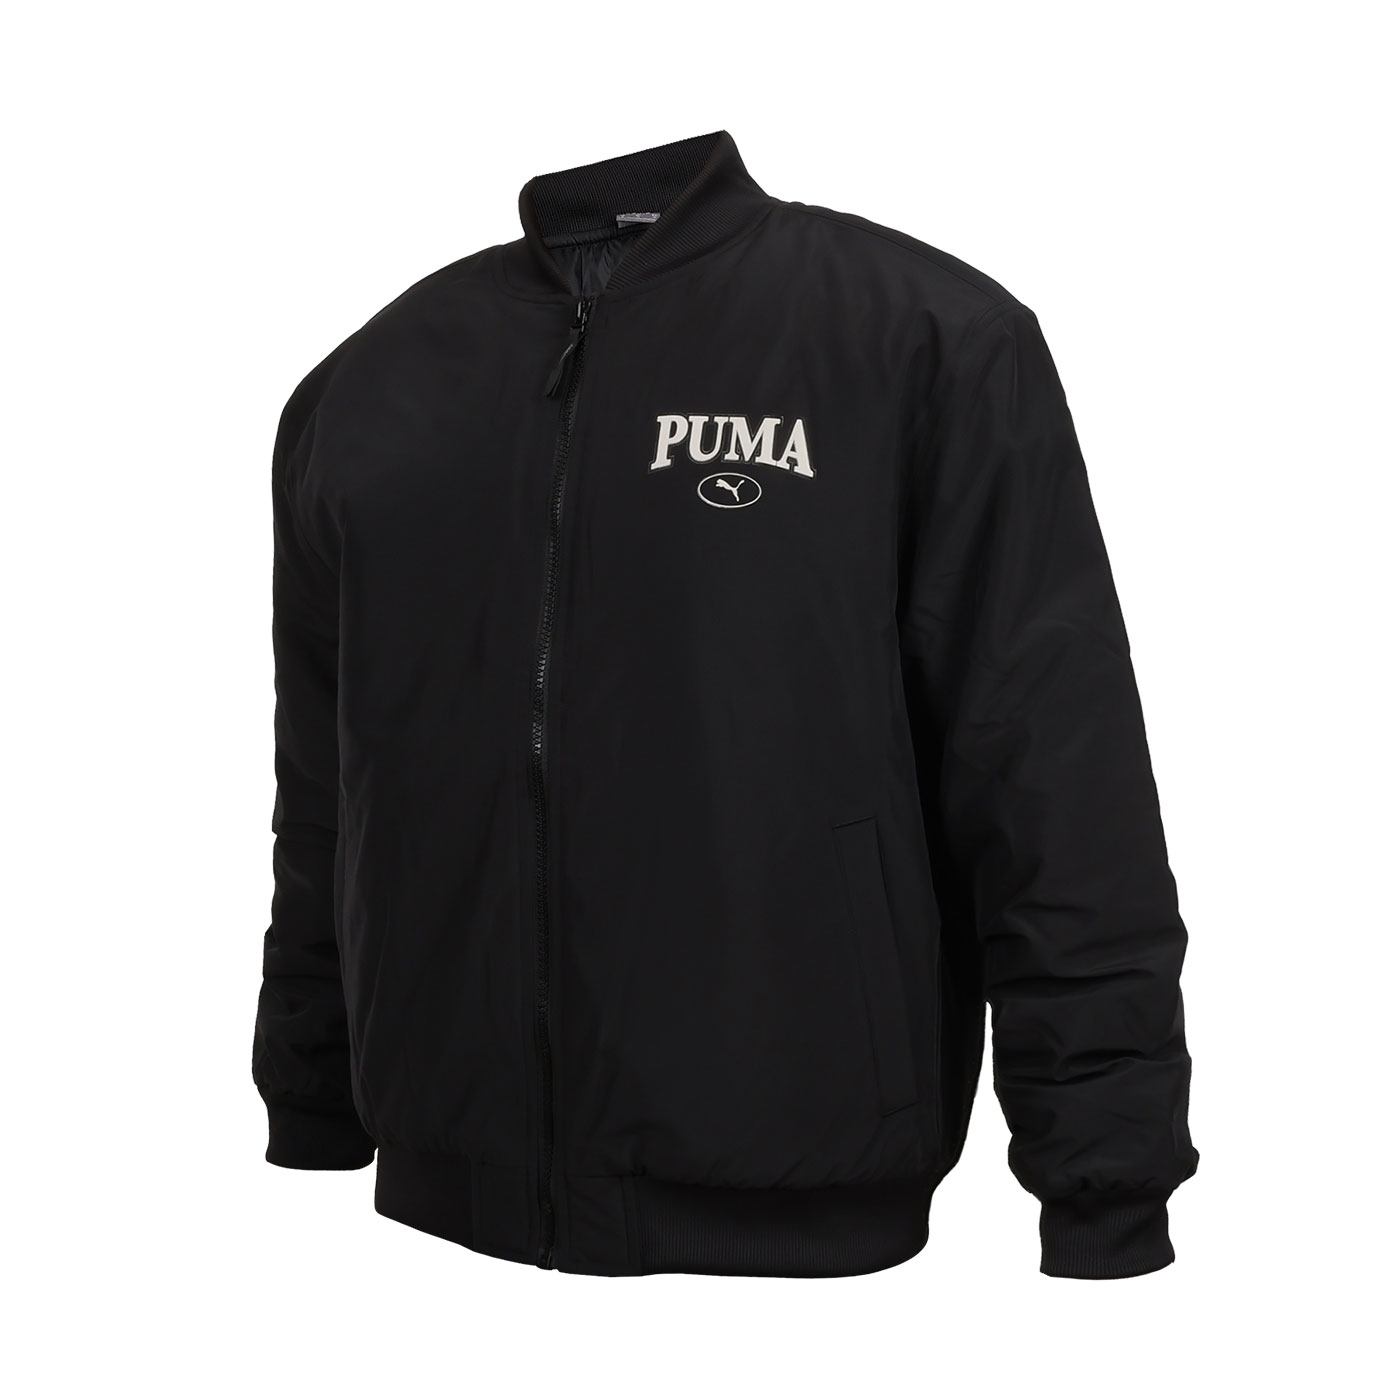 PUMA 男款基本系列Puma Squad棒球外套  68000801 - 黑淺灰